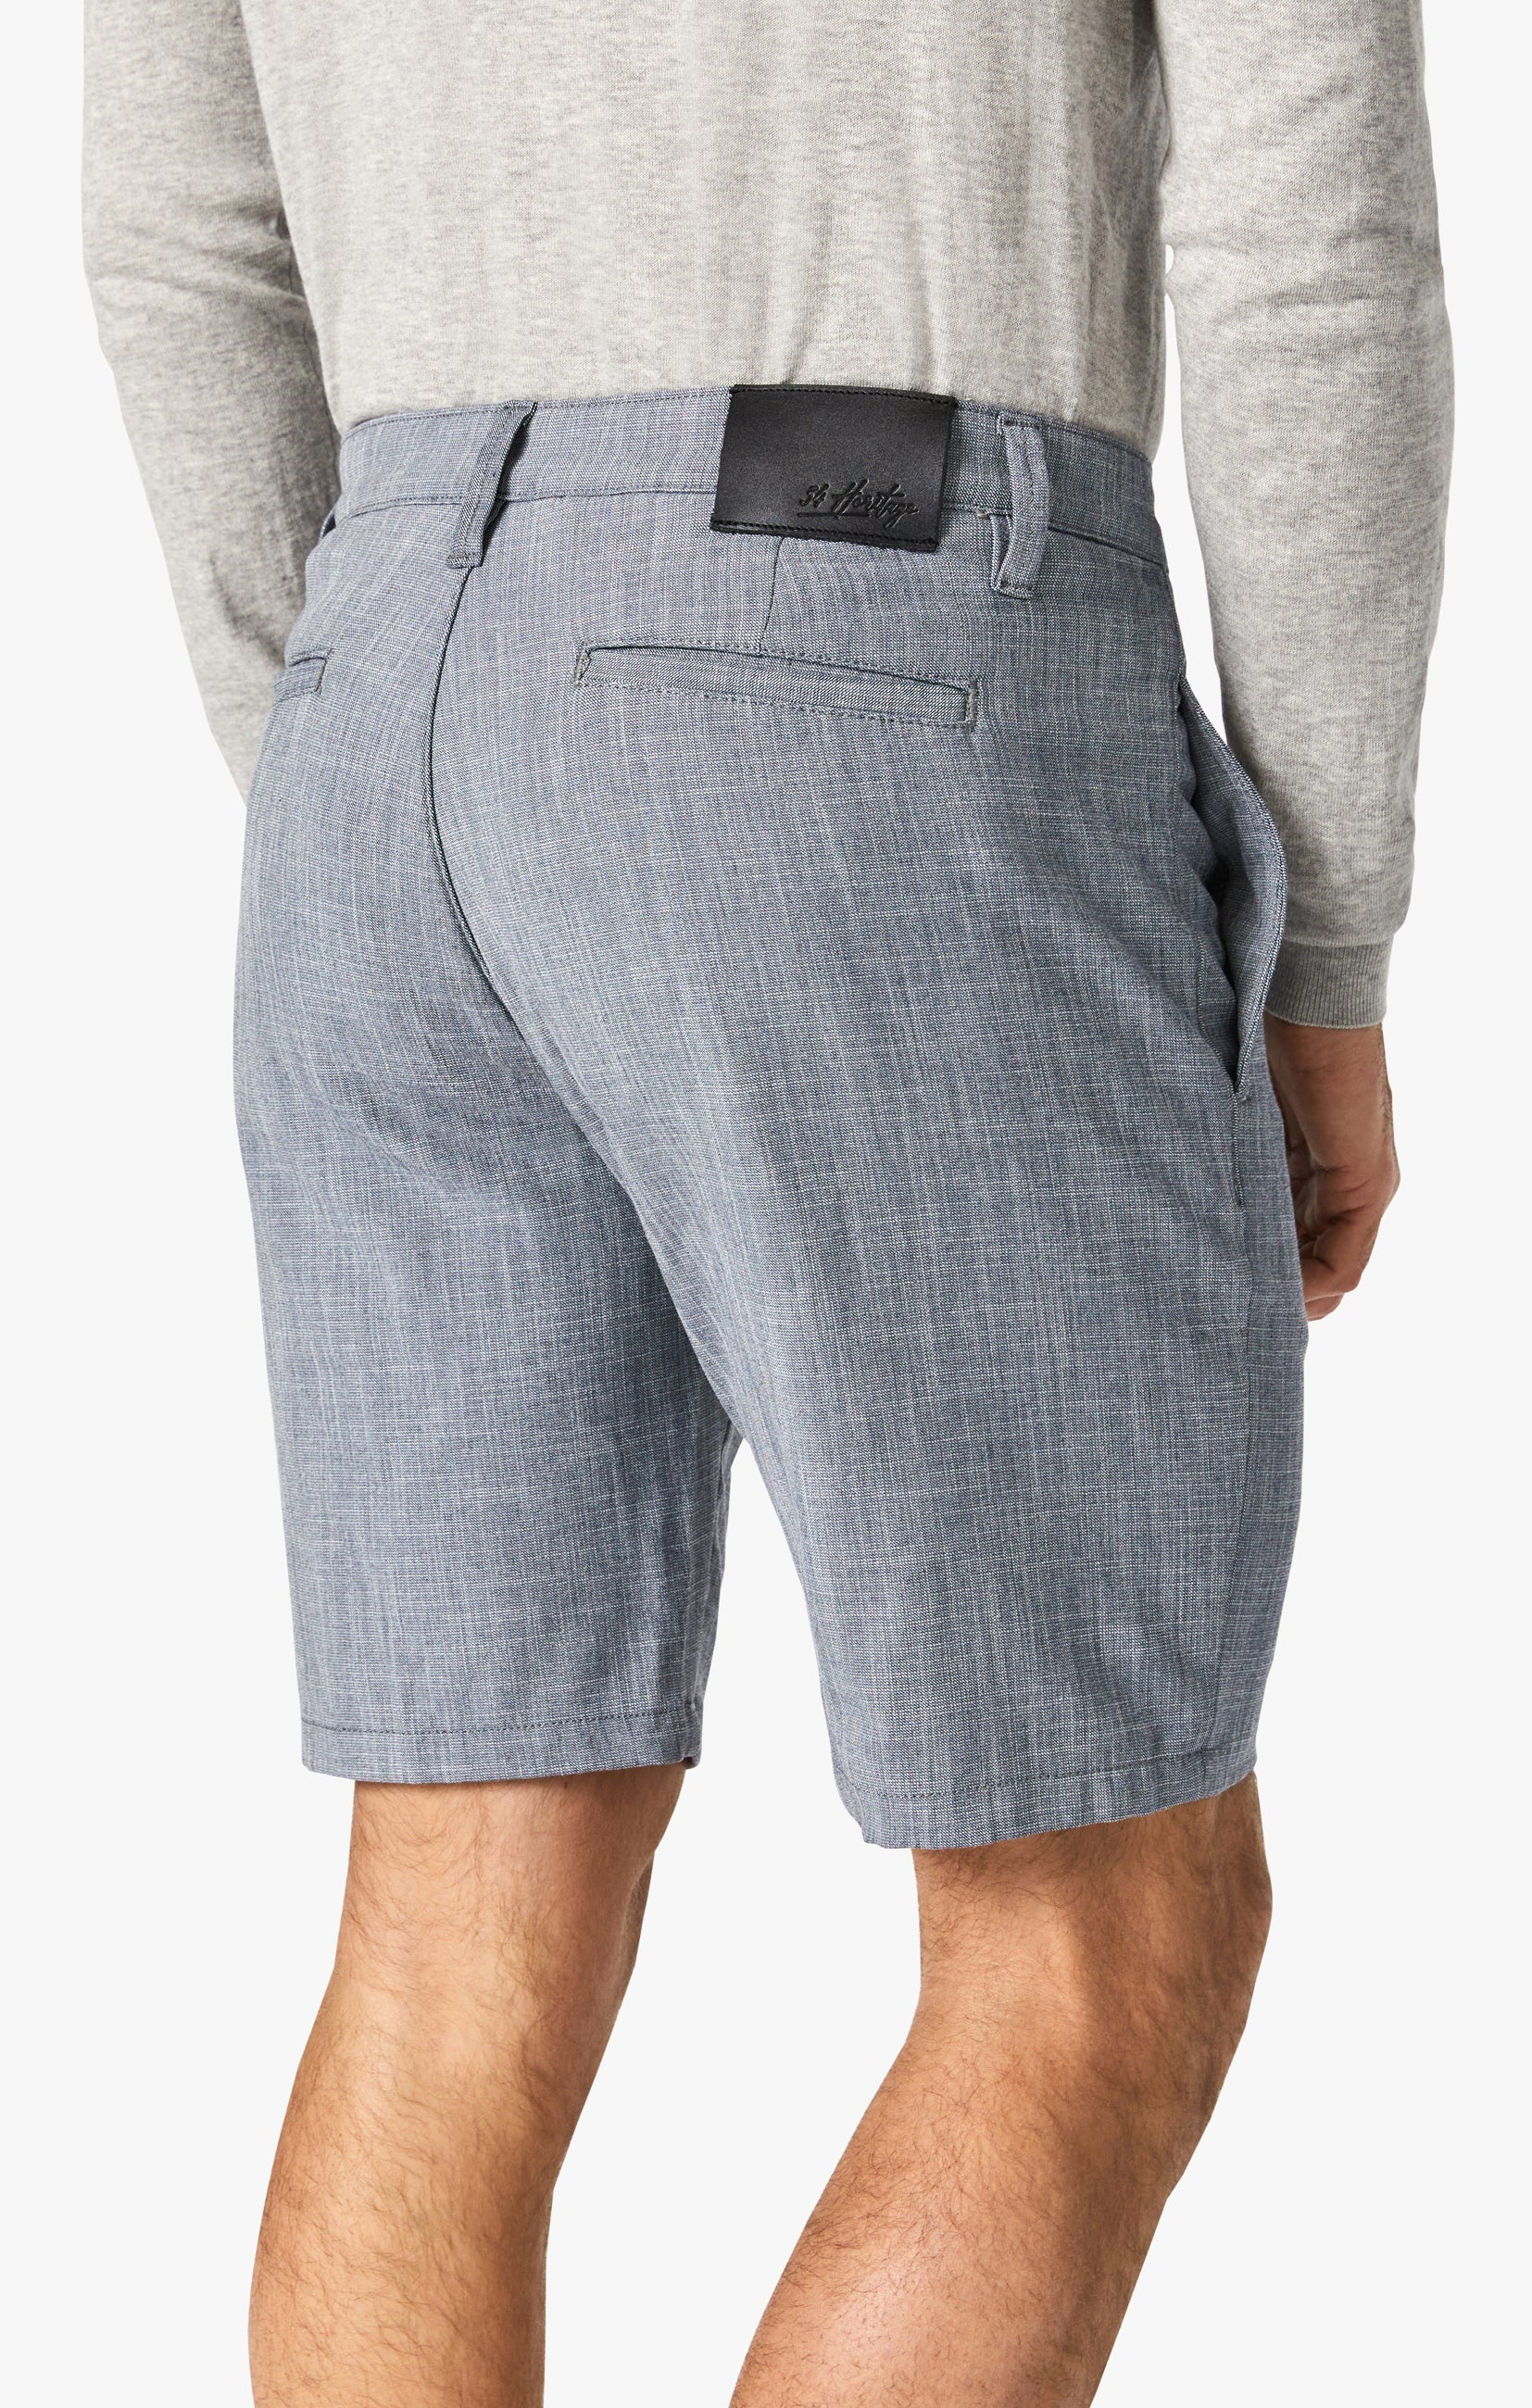 Nevada Shorts In Grey Cross Twill Image 5